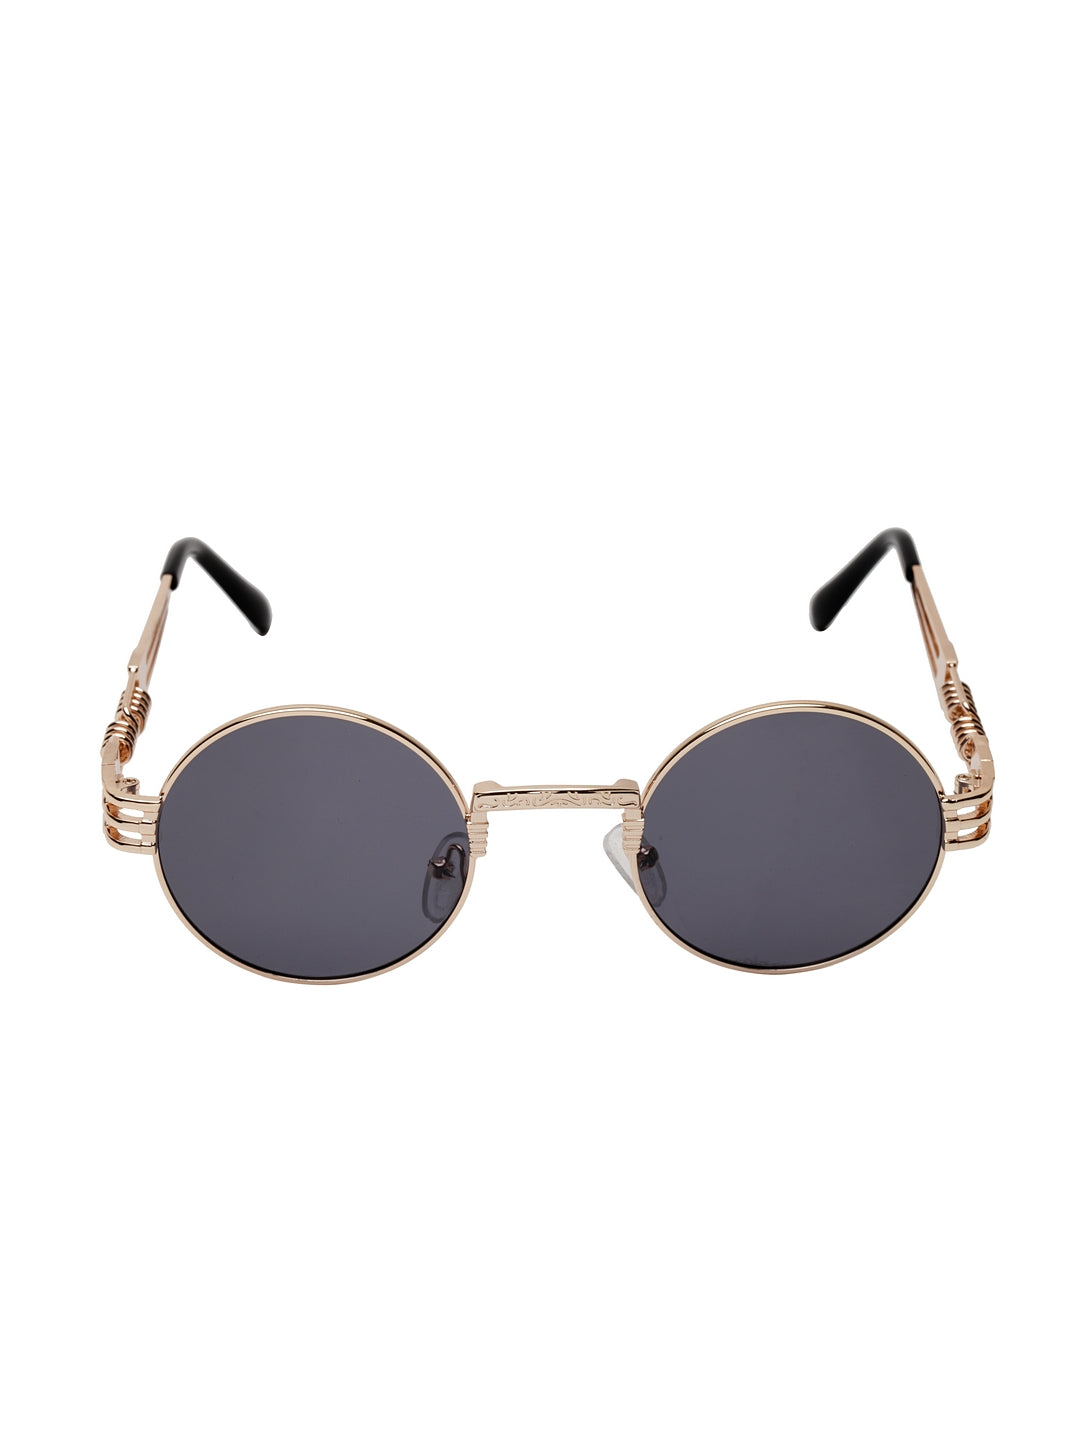 Cool Fashion Steampunk Sunglasses